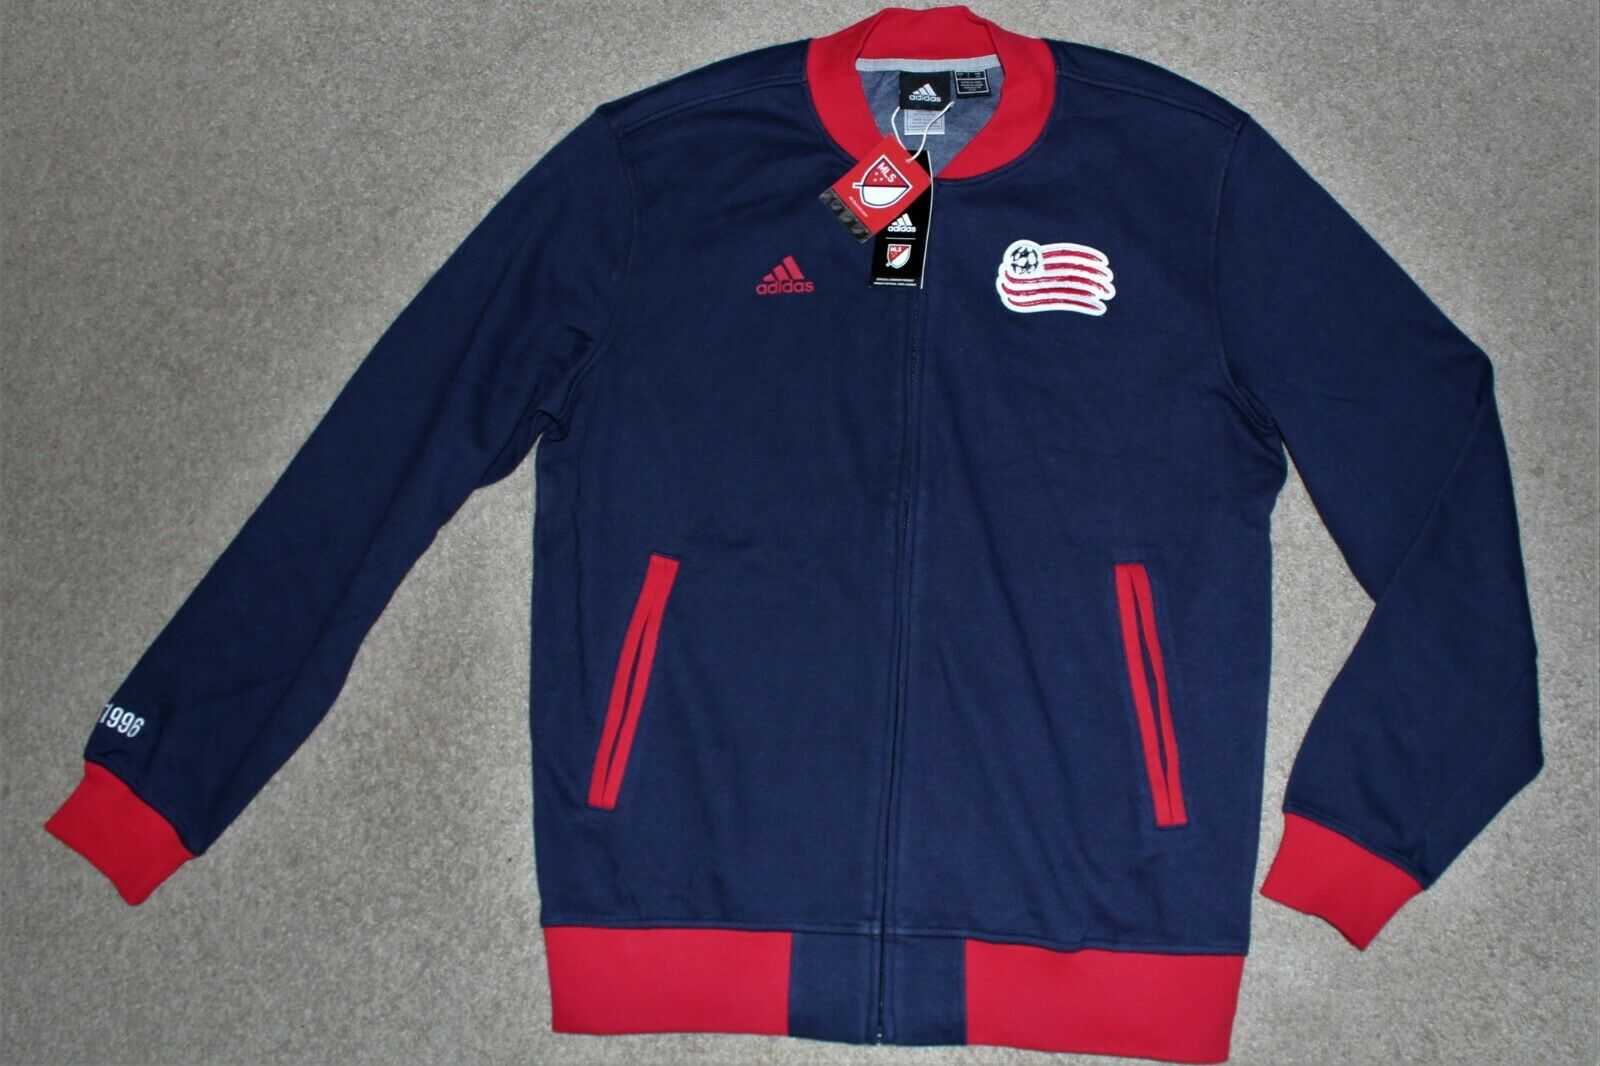 $90 Nwt Men Sz Large Smu Adidas Mls Usa Soccer Revolution Jacket Top Navy Blue